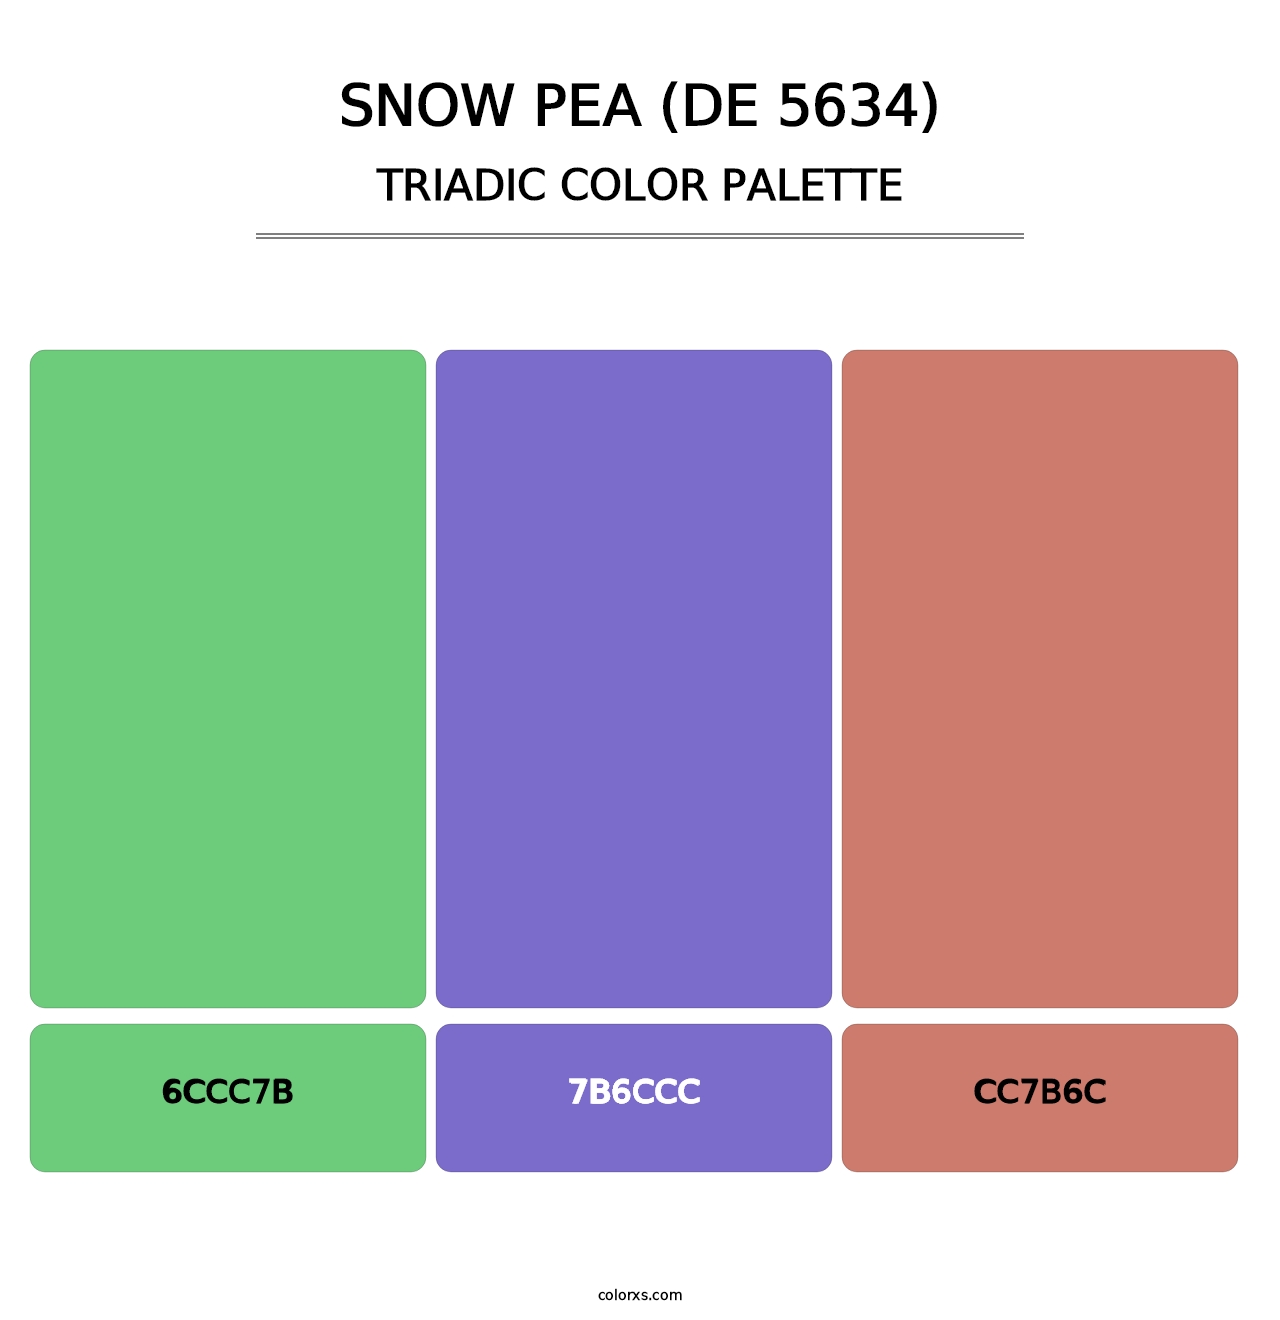 Snow Pea (DE 5634) - Triadic Color Palette